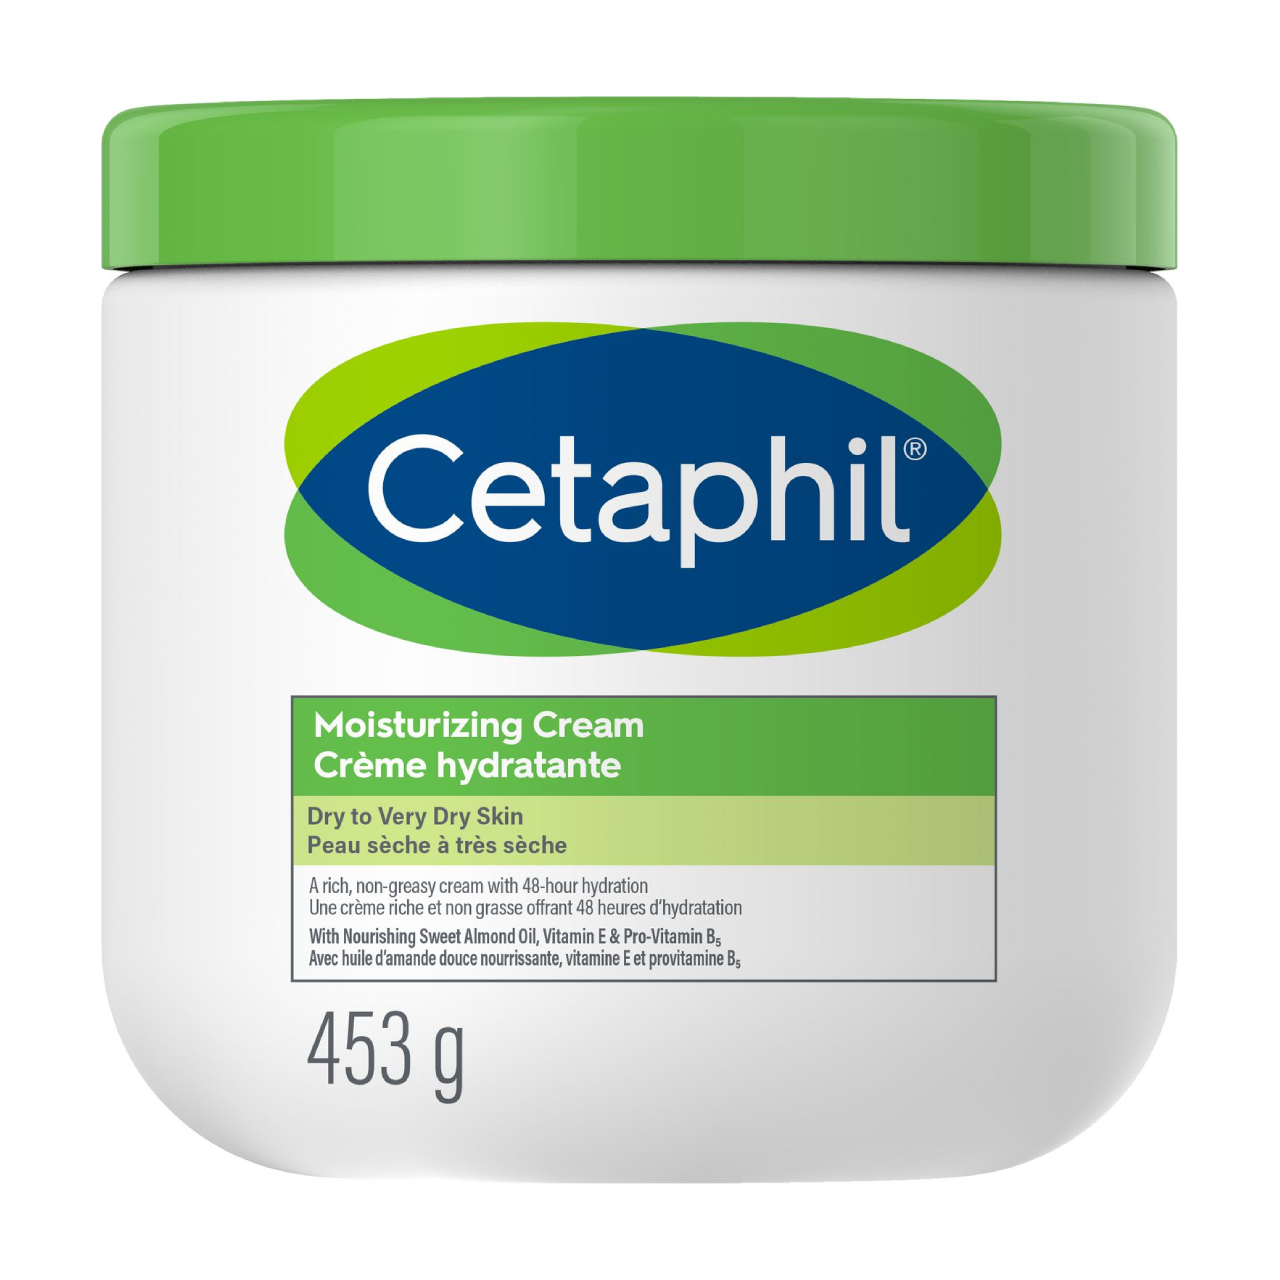 Cetaphil Moisturizing Cream 2 jar 566g + 453g |, Sensitive Skin | Provides  48-Hour Hydration